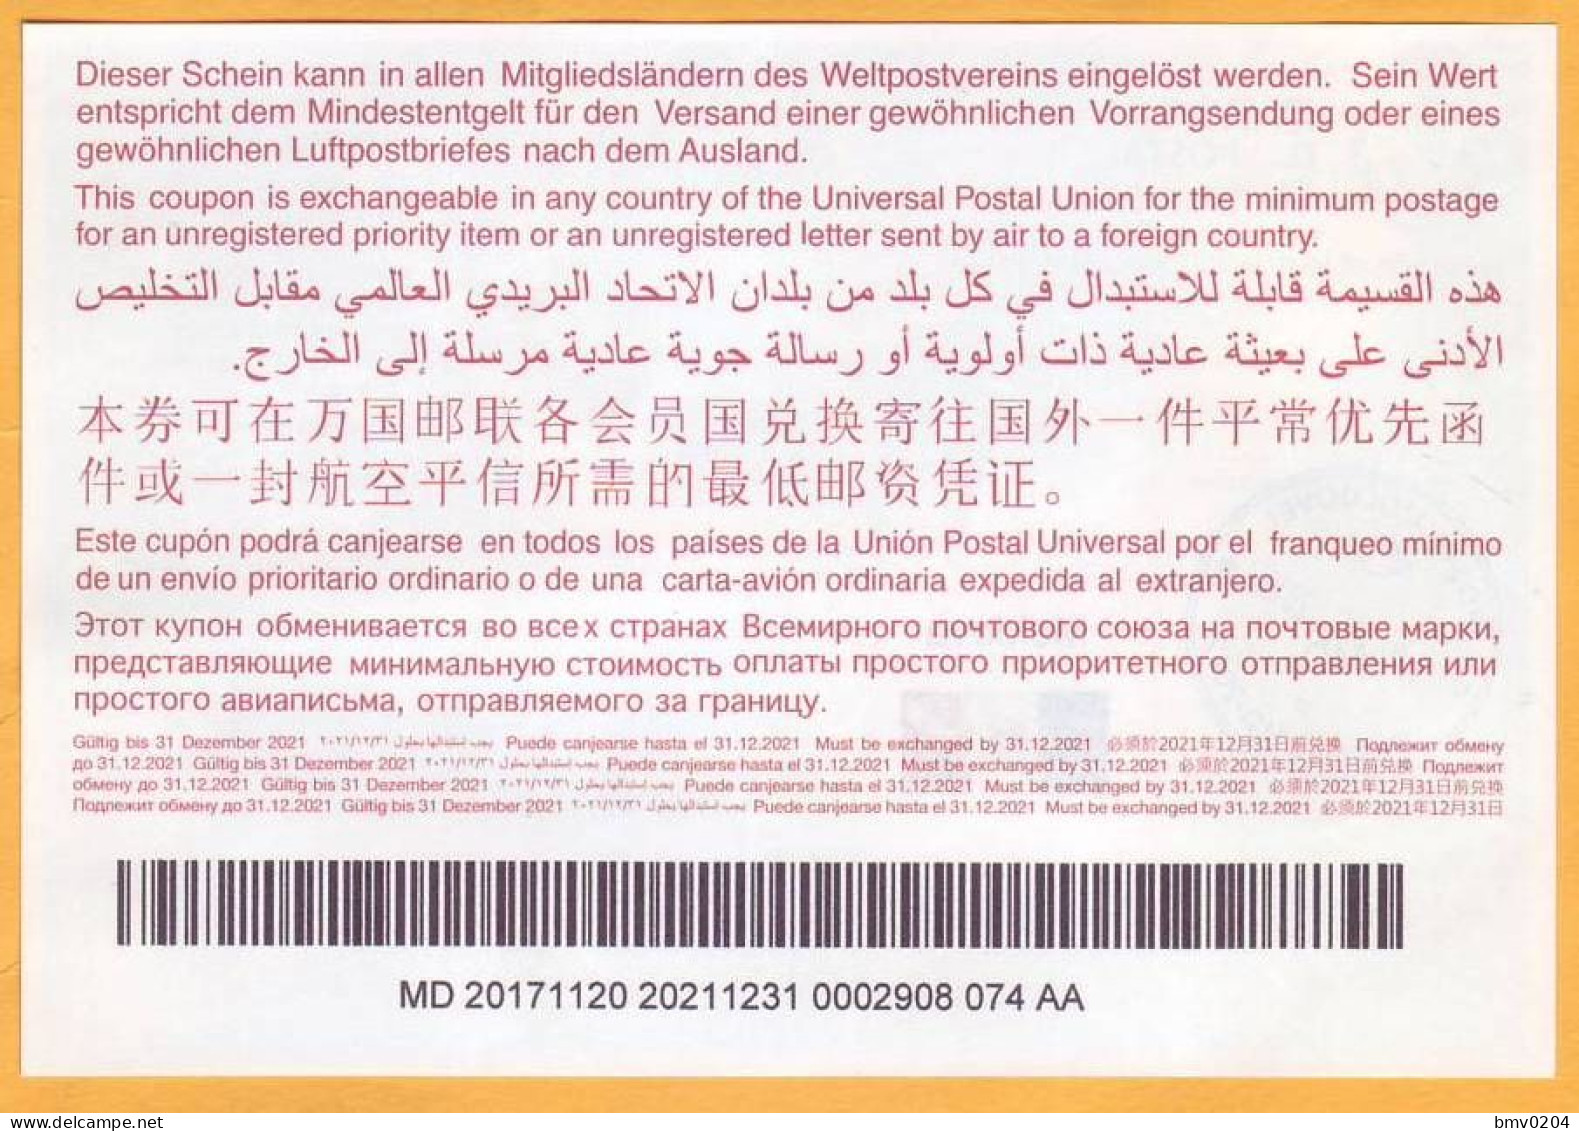 2017  Moldova Moldavie Moldau  Universal Postal Union. International Return Coupon. 0002908 074 AA - WPV (Weltpostverein)